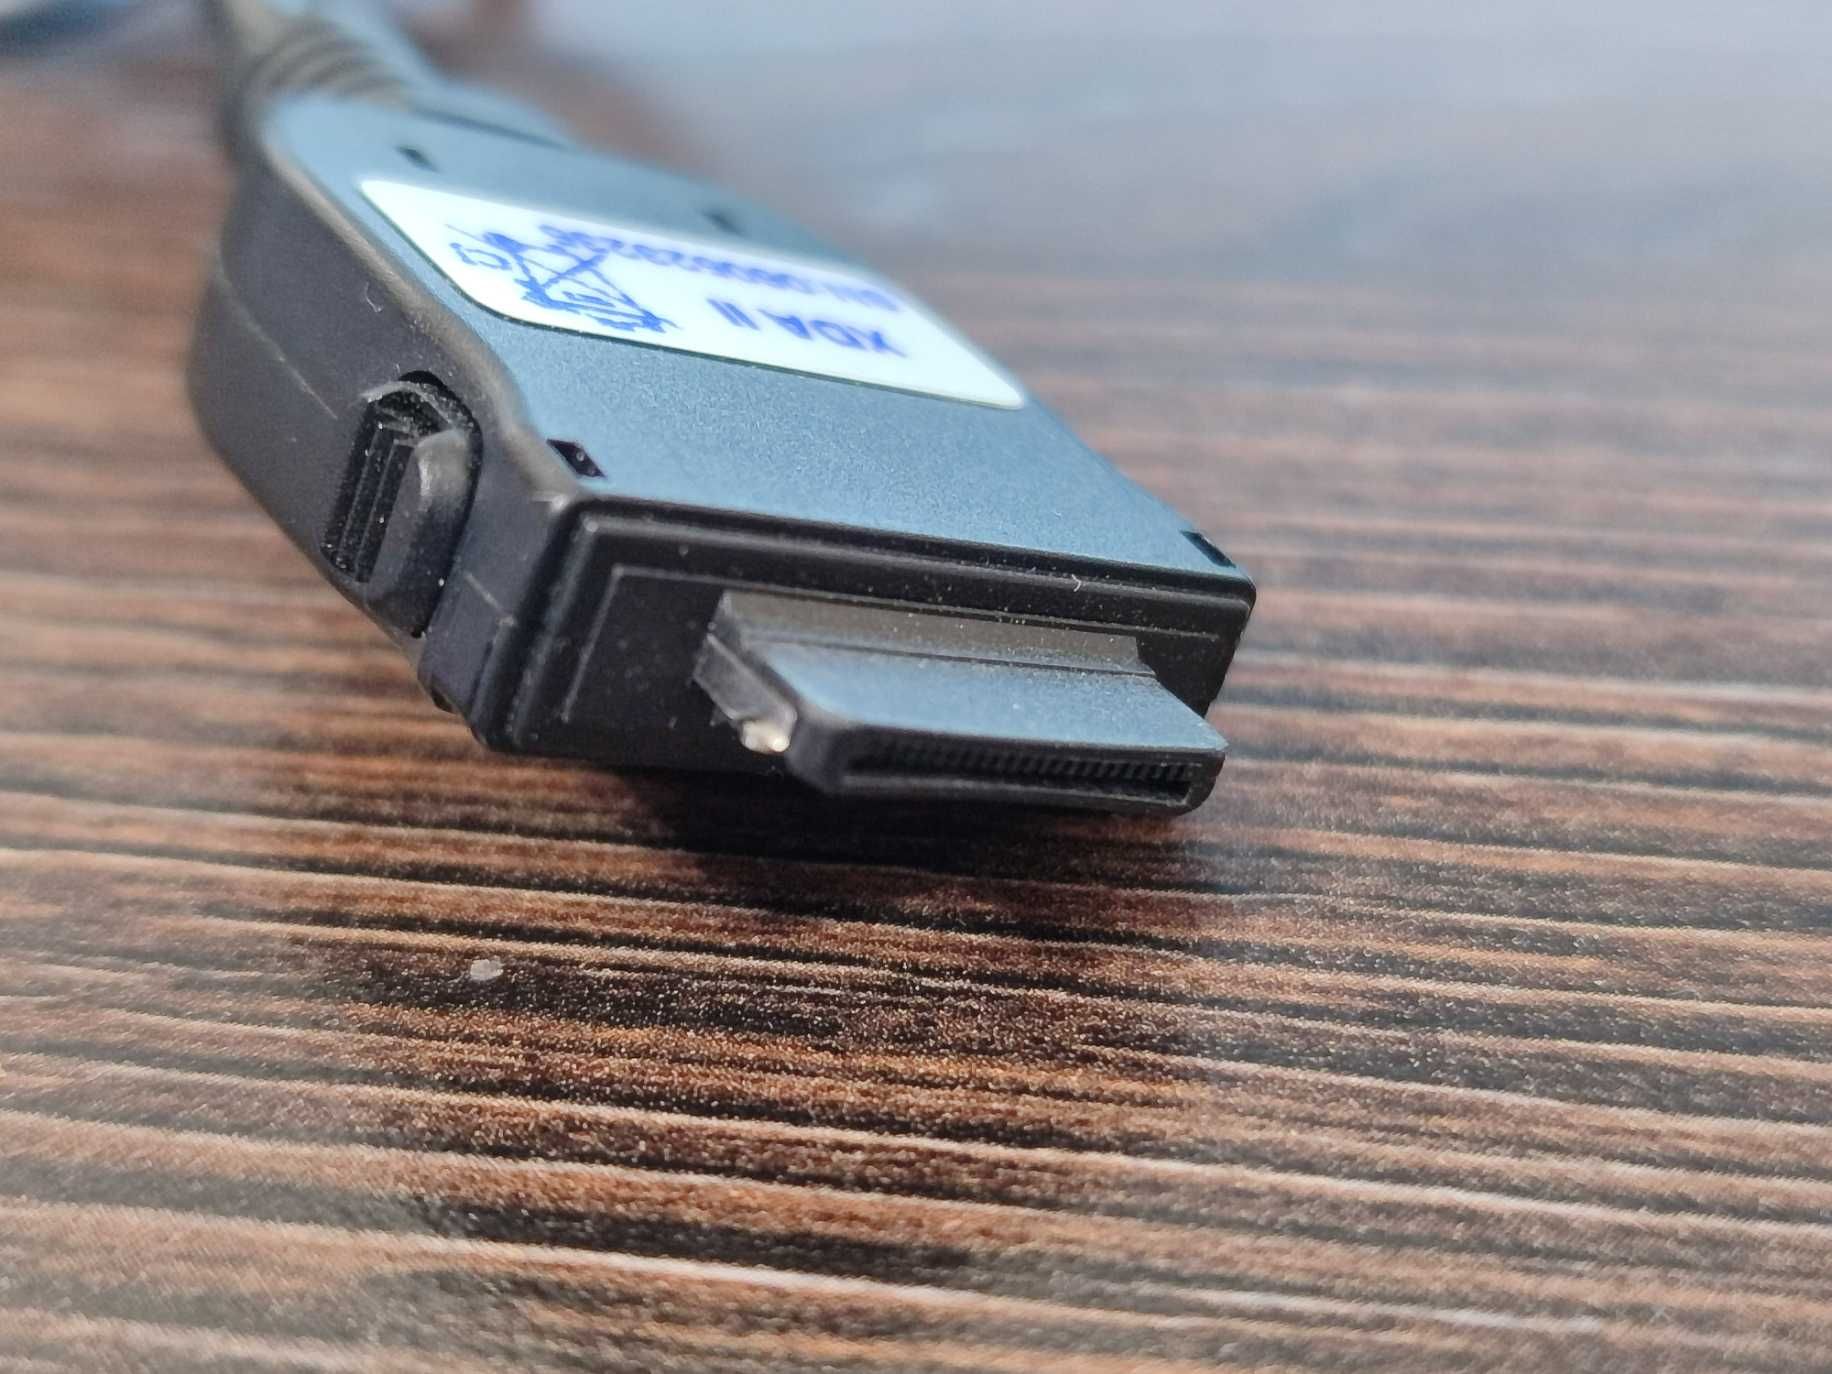 Кабель PDA USB Sync Charge Data cable для КПК O2 XDA II